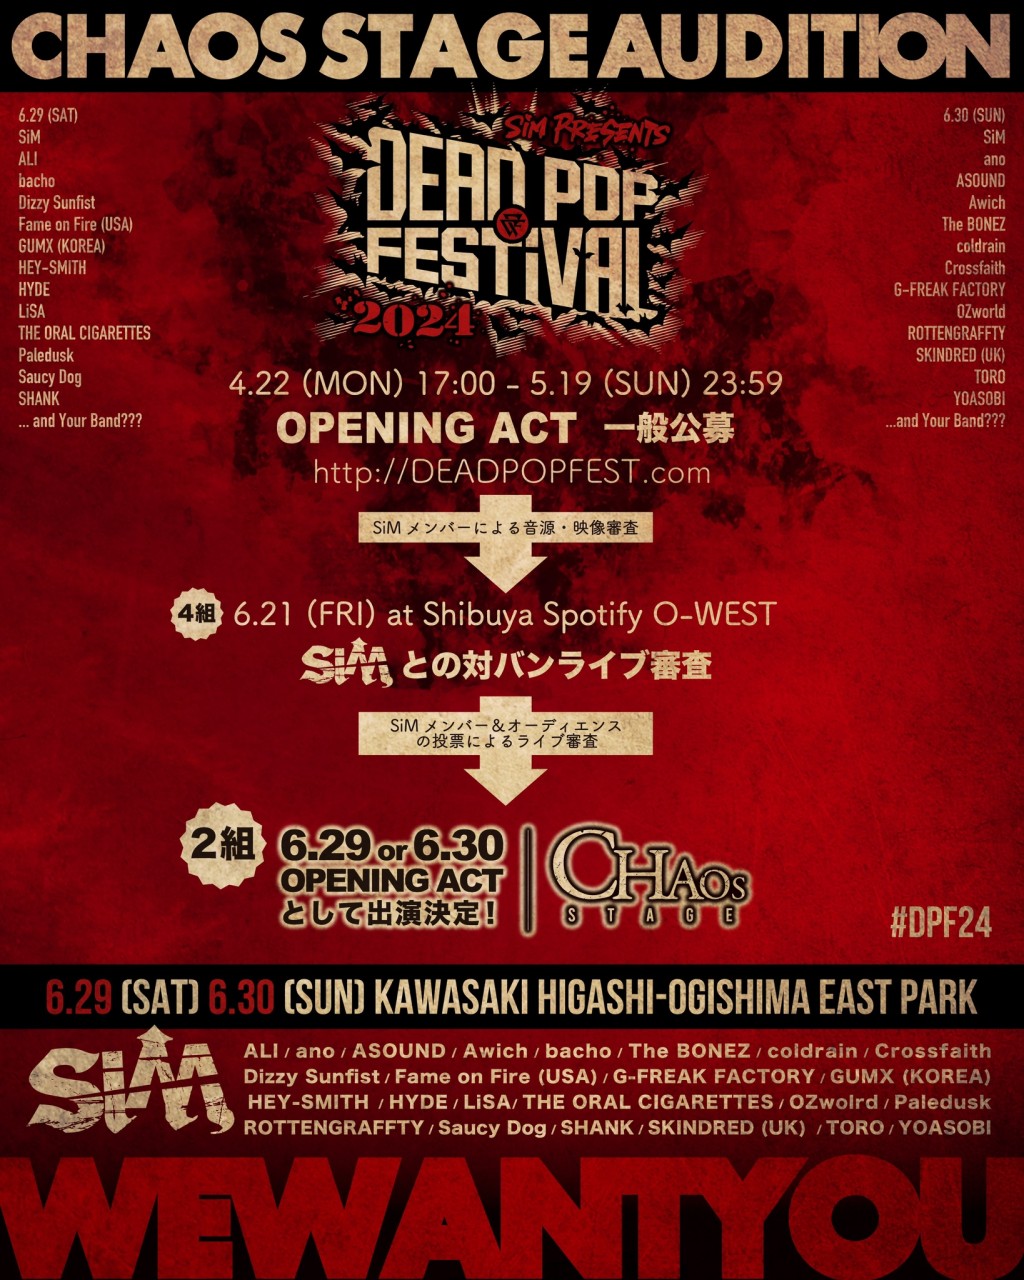 DEAD POP FESTiVAL 2024 "CHAOS STAGE" AUDITION LIVE